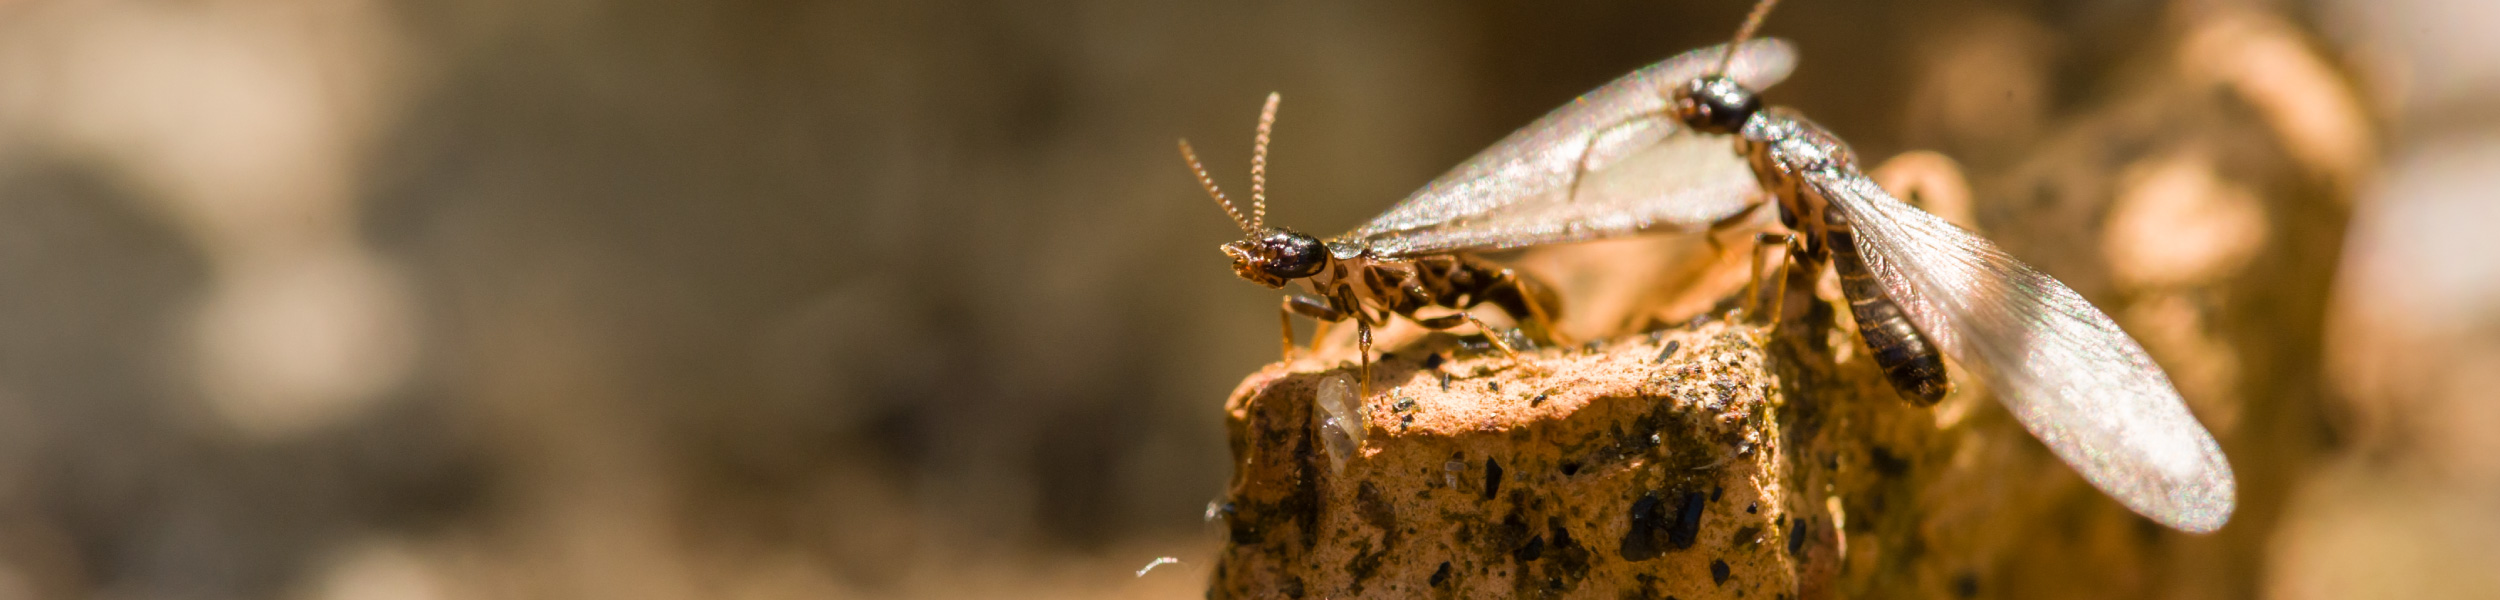 Termite Prevention and Eradication